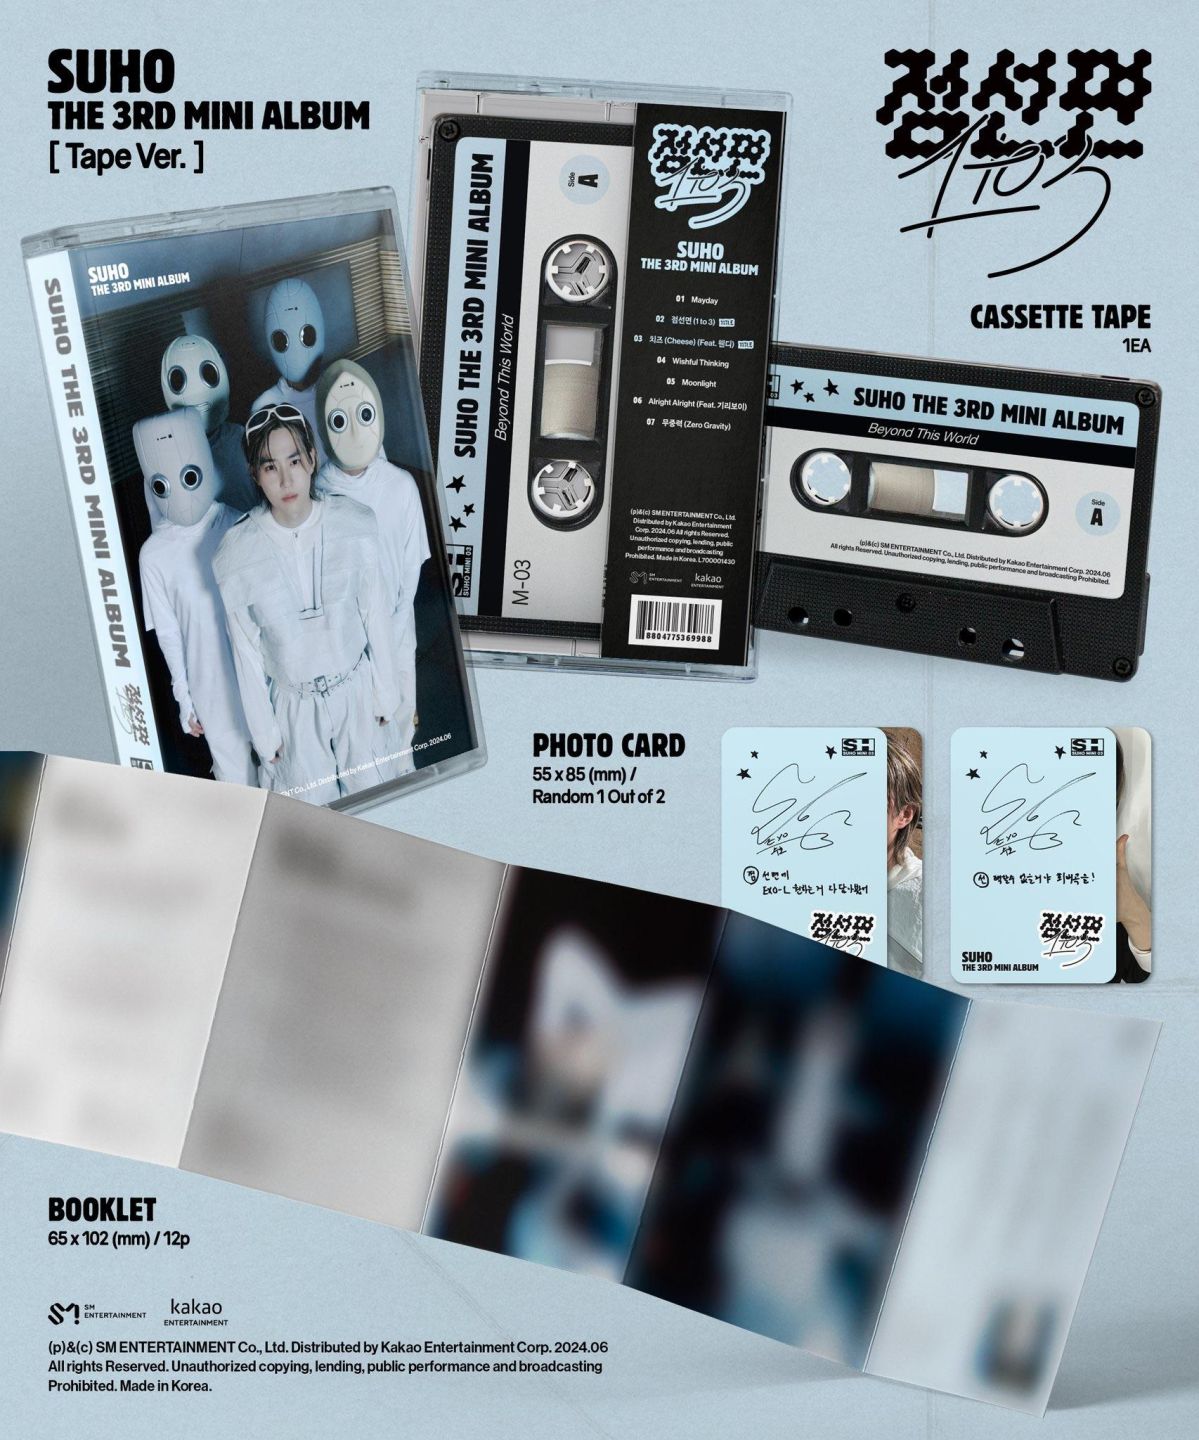 exo-suho-the-3rd-mini-album-1-to-3-tape-ver-album-packaging-v0-mvh2thba9k4d1